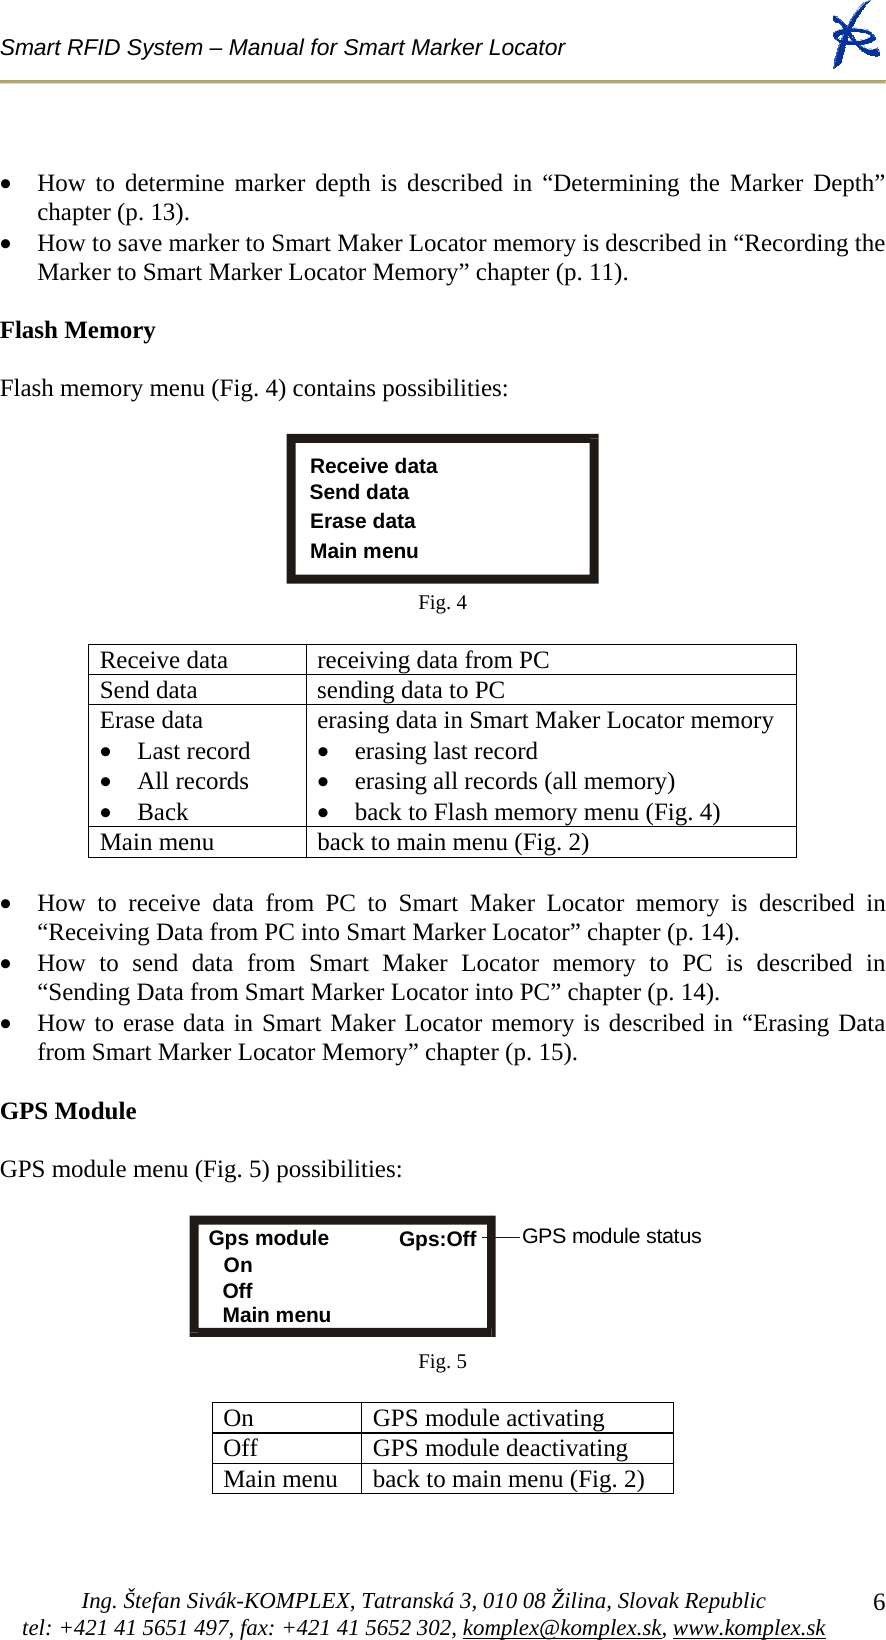 Smart RFID System – Manual for Smart Marker Locator  Ing. Štefan Sivák-KOMPLEX, Tatranská 3, 010 08 Žilina, Slovak Republic tel: +421 41 5651 497, fax: +421 41 5652 302, komplex@komplex.sk, www.komplex.sk 6• How to determine marker depth is described in “Determining the Marker Depth” chapter (p. 13). • How to save marker to Smart Maker Locator memory is described in “Recording the Marker to Smart Marker Locator Memory” chapter (p. 11).  Flash Memory  Flash memory menu (Fig. 4) contains possibilities:  Send dataErase dataMain menuReceive data Fig. 4  Receive data  receiving data from PC Send data  sending data to PC Erase data • Last record • All records • Back erasing data in Smart Maker Locator memory • erasing last record  • erasing all records (all memory)  • back to Flash memory menu (Fig. 4) Main menu  back to main menu (Fig. 2)  • How to receive data from PC to Smart Maker Locator memory is described in “Receiving Data from PC into Smart Marker Locator” chapter (p. 14). • How to send data from Smart Maker Locator memory to PC is described in “Sending Data from Smart Marker Locator into PC” chapter (p. 14). • How to erase data in Smart Maker Locator memory is described in “Erasing Data from Smart Marker Locator Memory” chapter (p. 15).  GPS Module  GPS module menu (Fig. 5) possibilities:   Gps module Gps:Off  OnOffMain menuGPS module status Fig. 5  On GPS module activating Off GPS module deactivating Main menu  back to main menu (Fig. 2) 